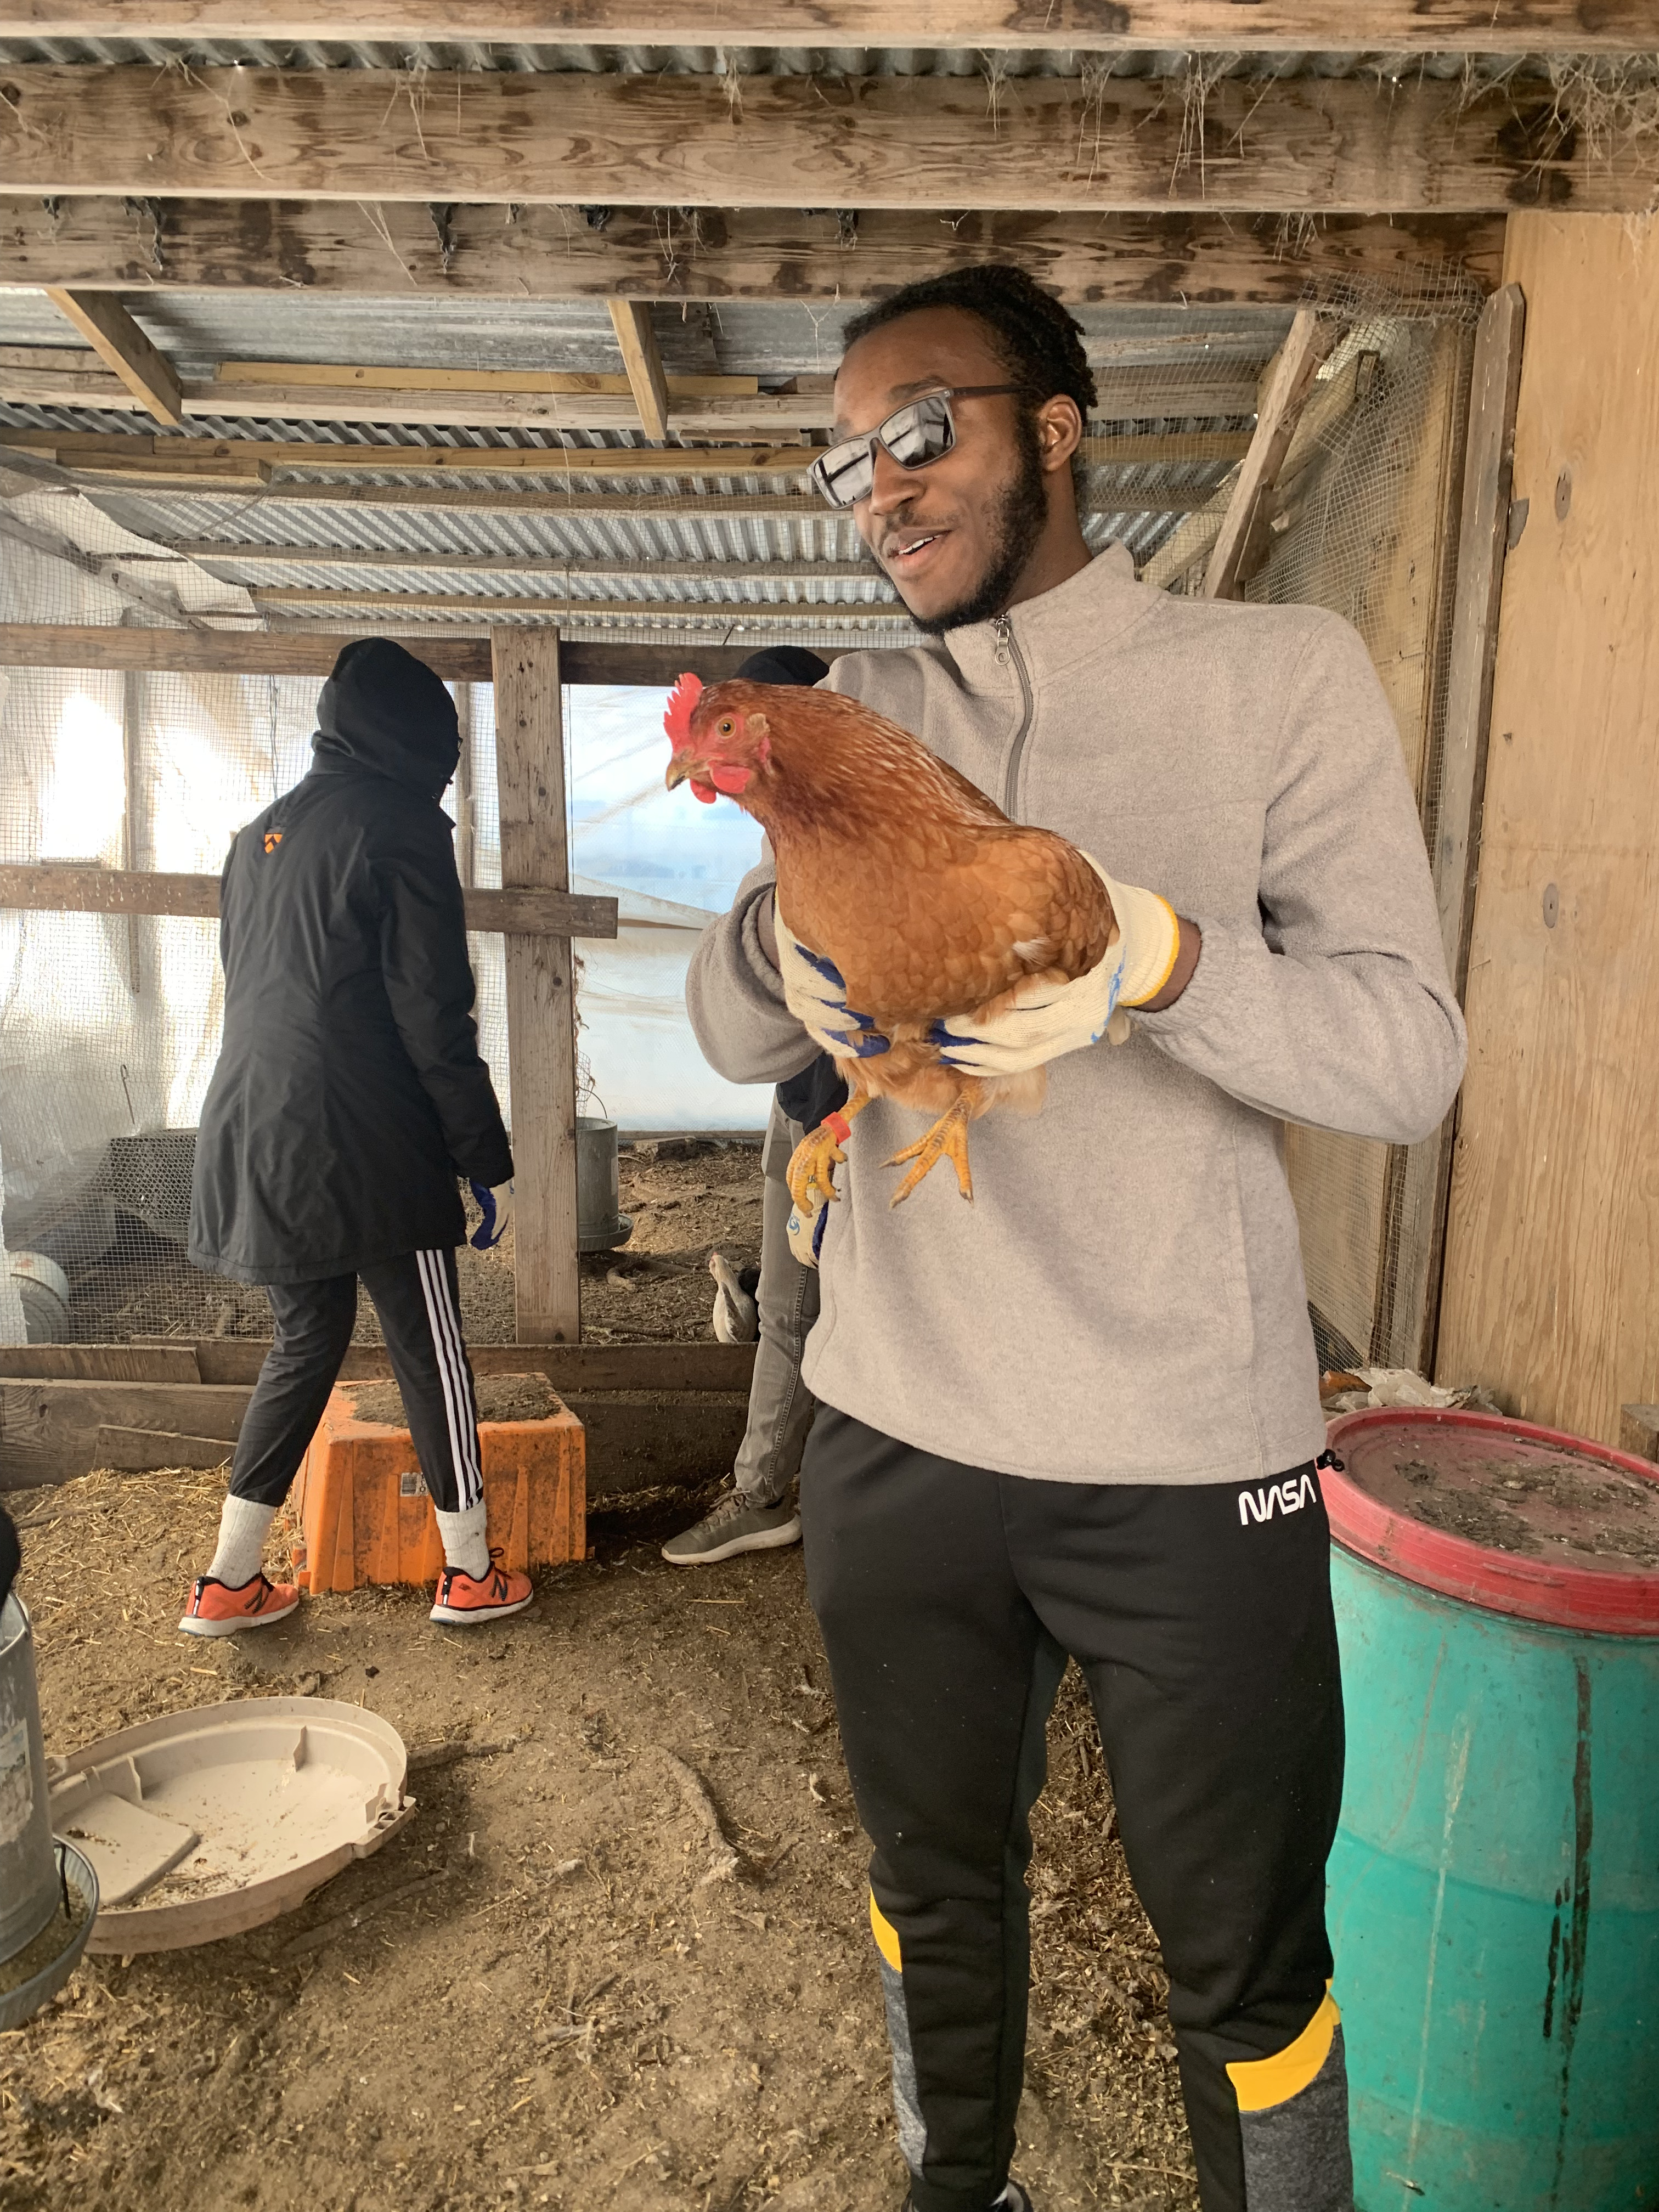 Man holding chicken in farm building